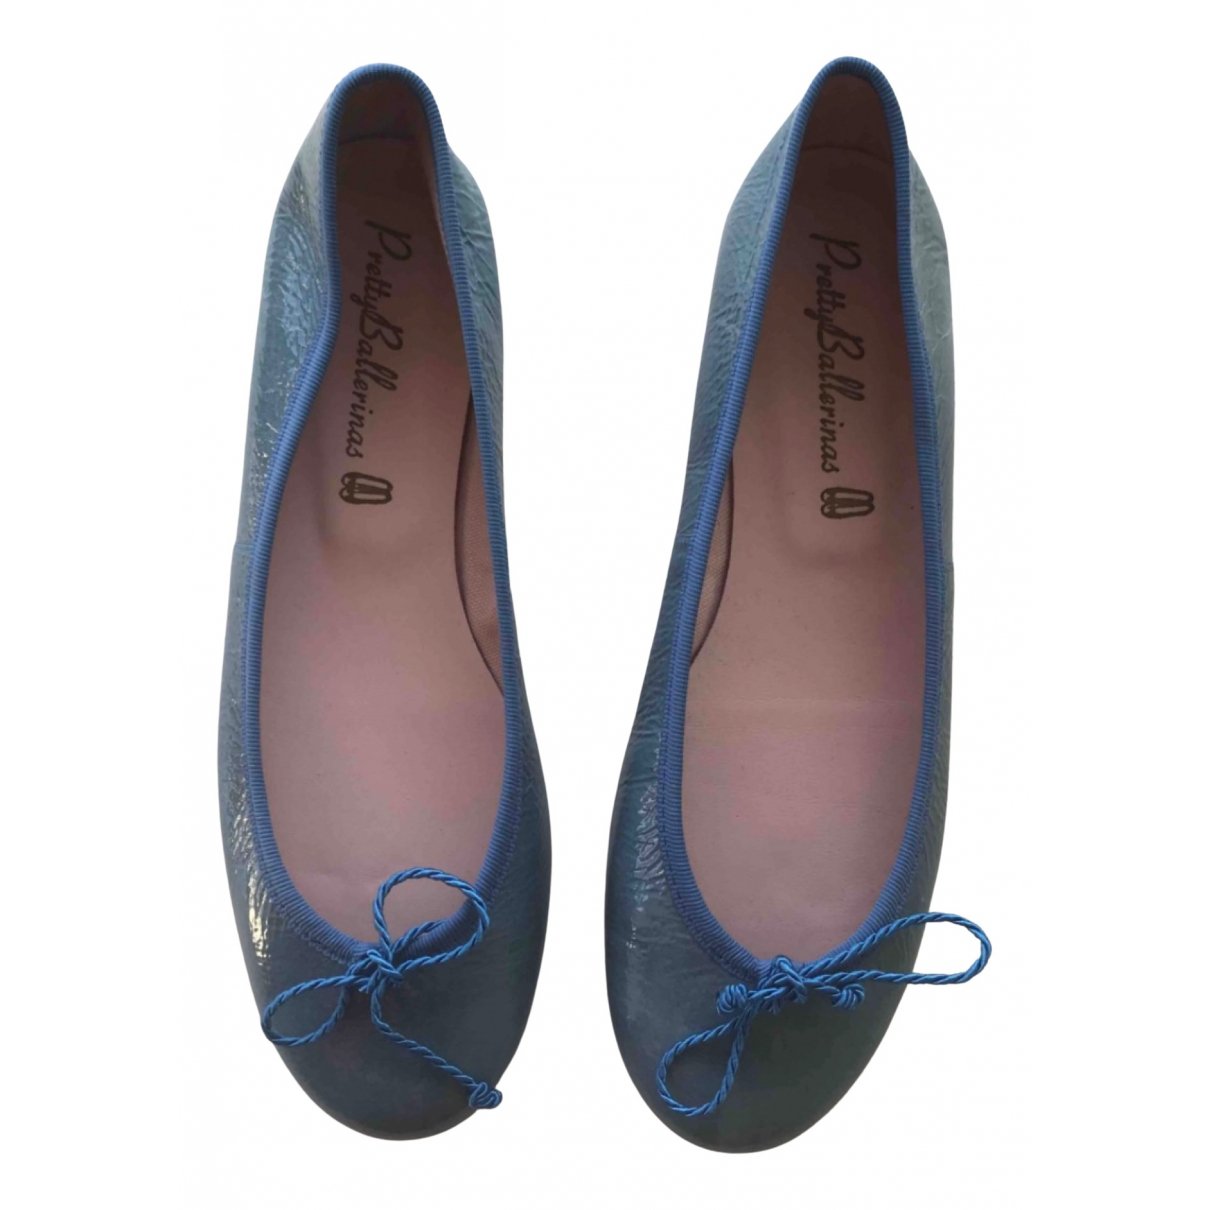 Pretty Ballerinas Marilyn Ballet Flats in Blue Patent Leather.jpg